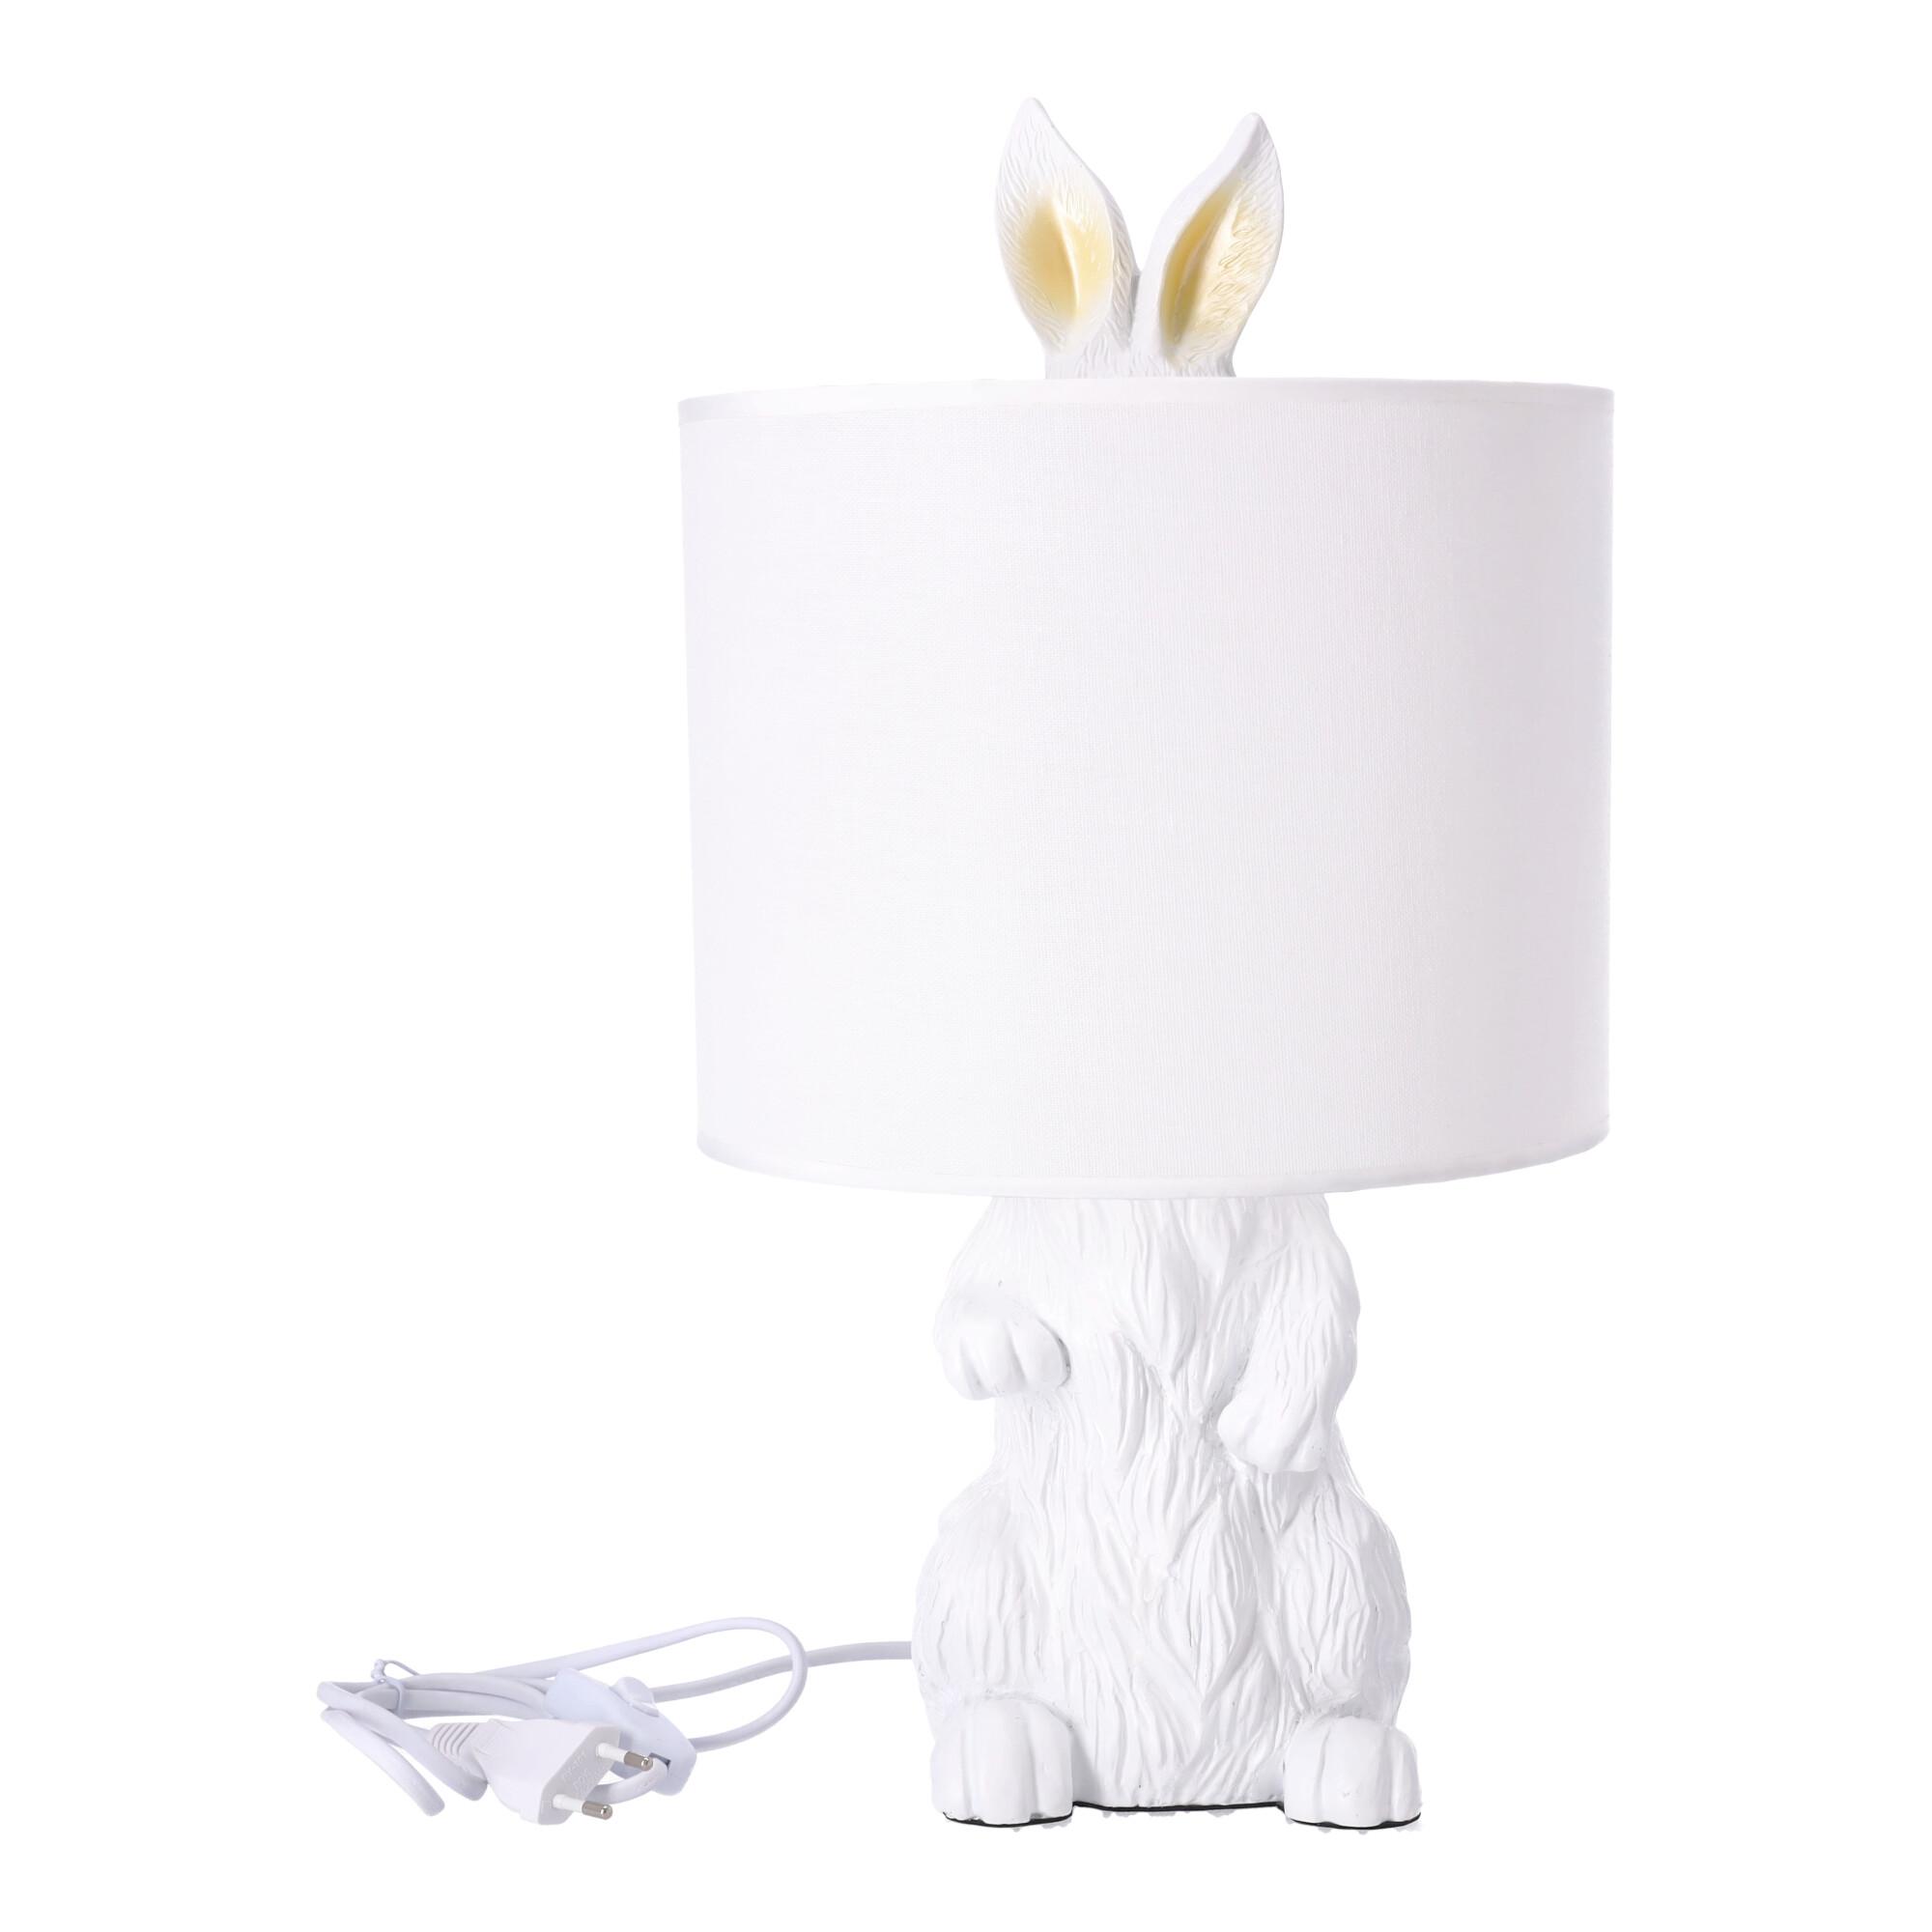 Bedside, office, table lamp - Rabbit